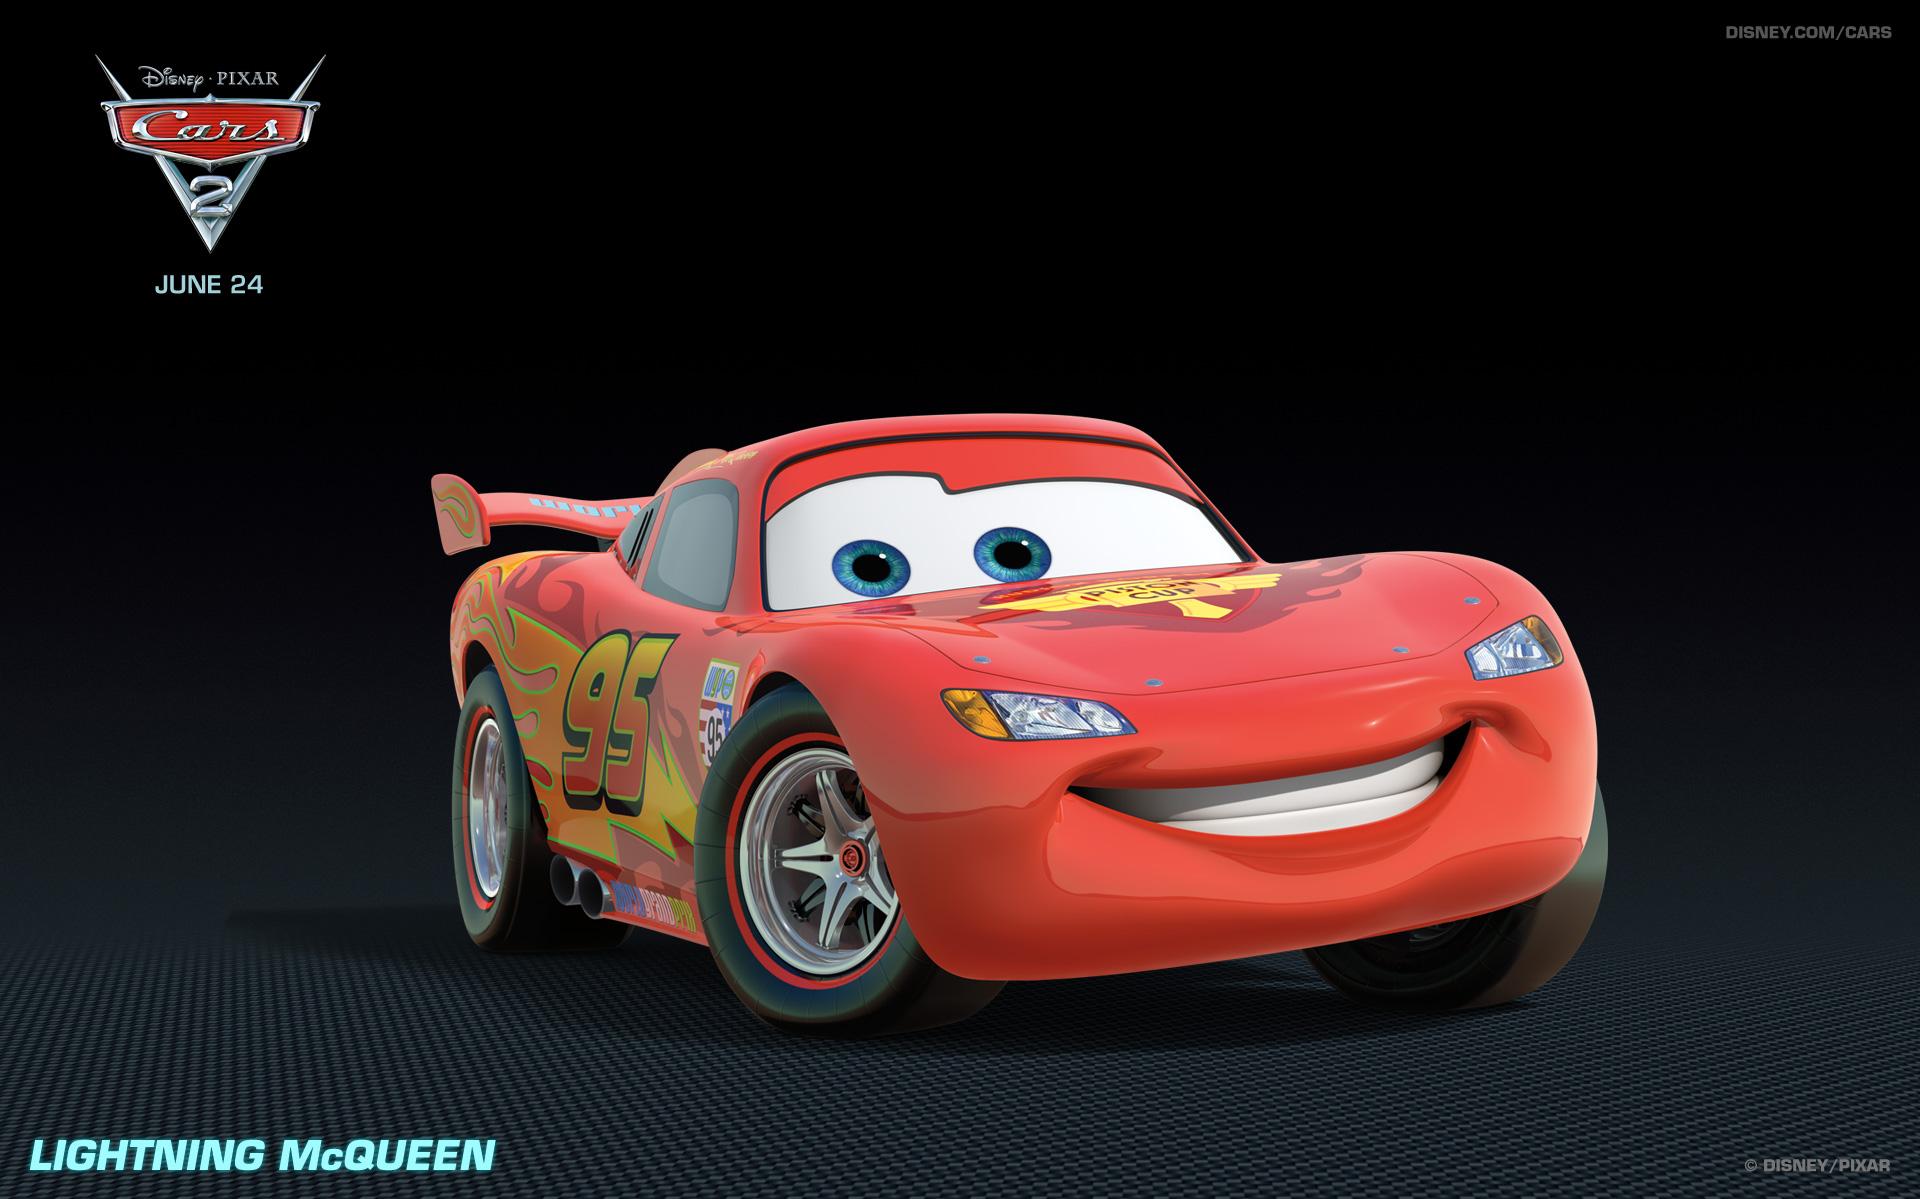 Lightning Mcqueen The Race Car From Disney S Cars HD Desktop